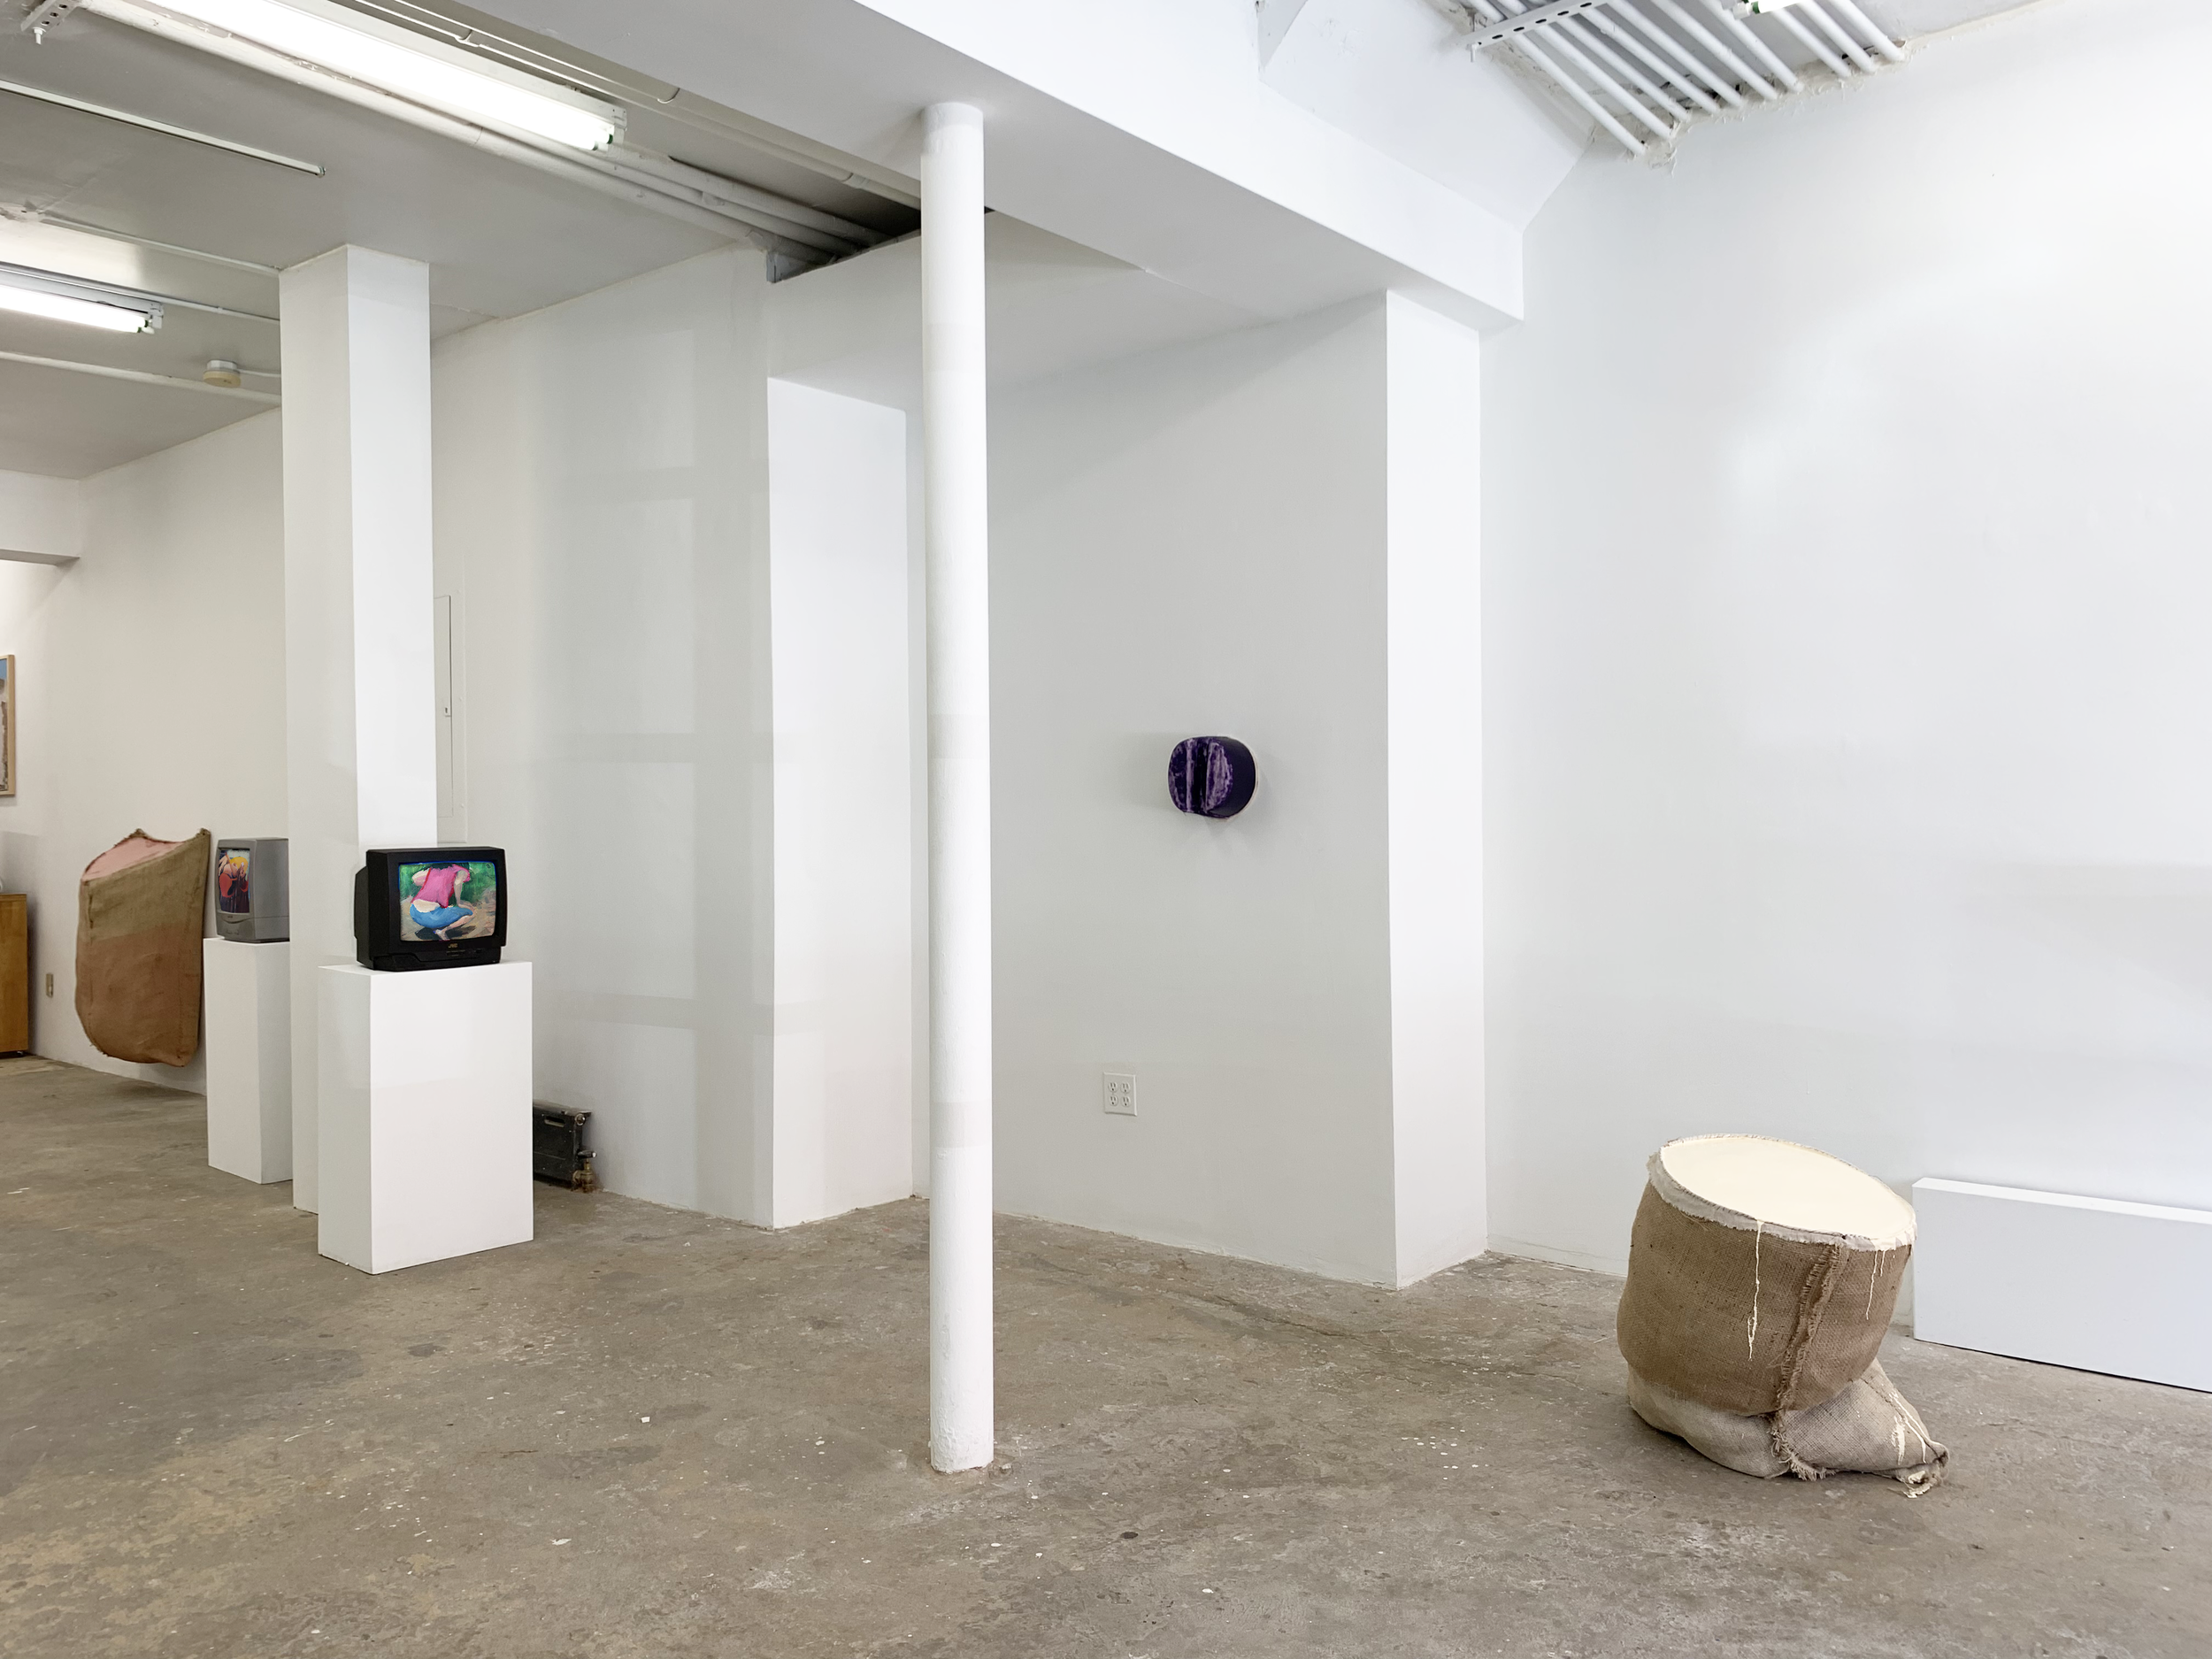  Trittbrettfahrer exhibition at Cindy Rucker Gallery, featuring works by Claudia Bitran, Howard Schwartzberg, Rusty Shackleford, installation image 